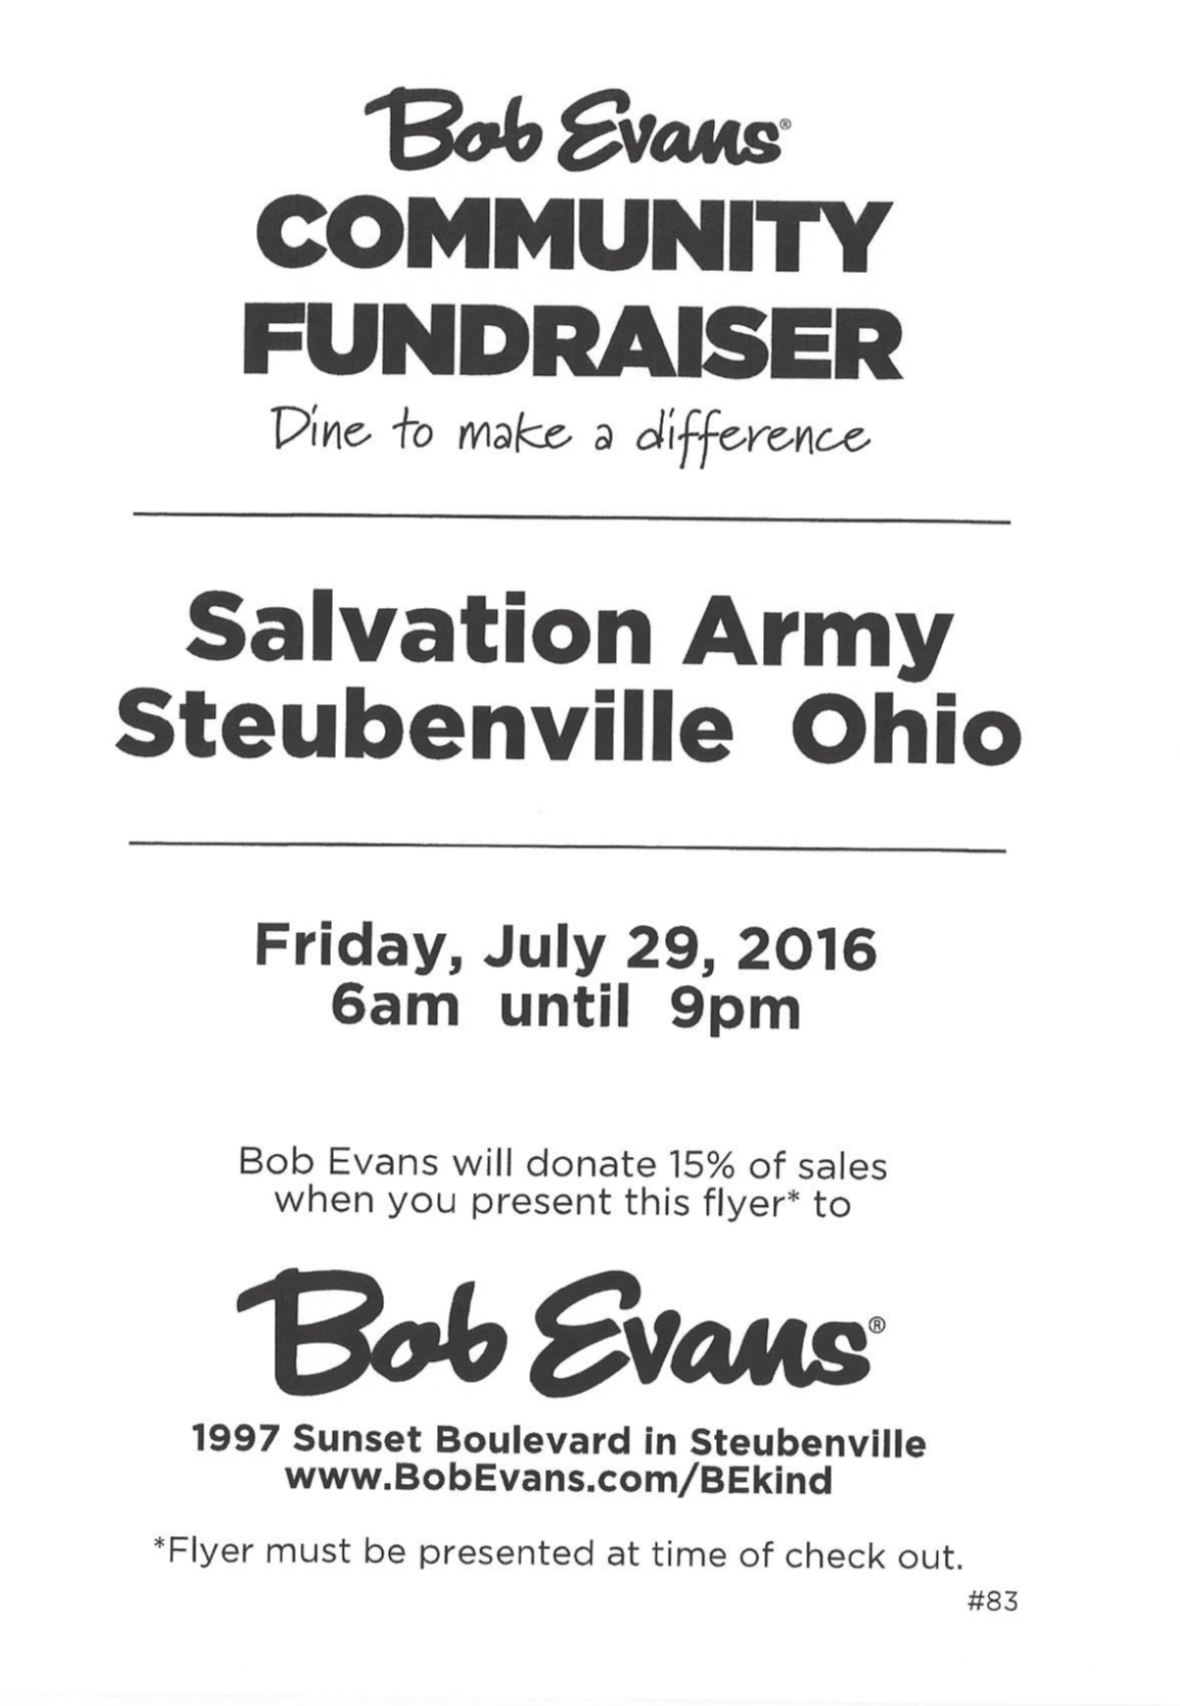 Bob Evans Community Fundraiser to benefit Steubenville Salvation Army